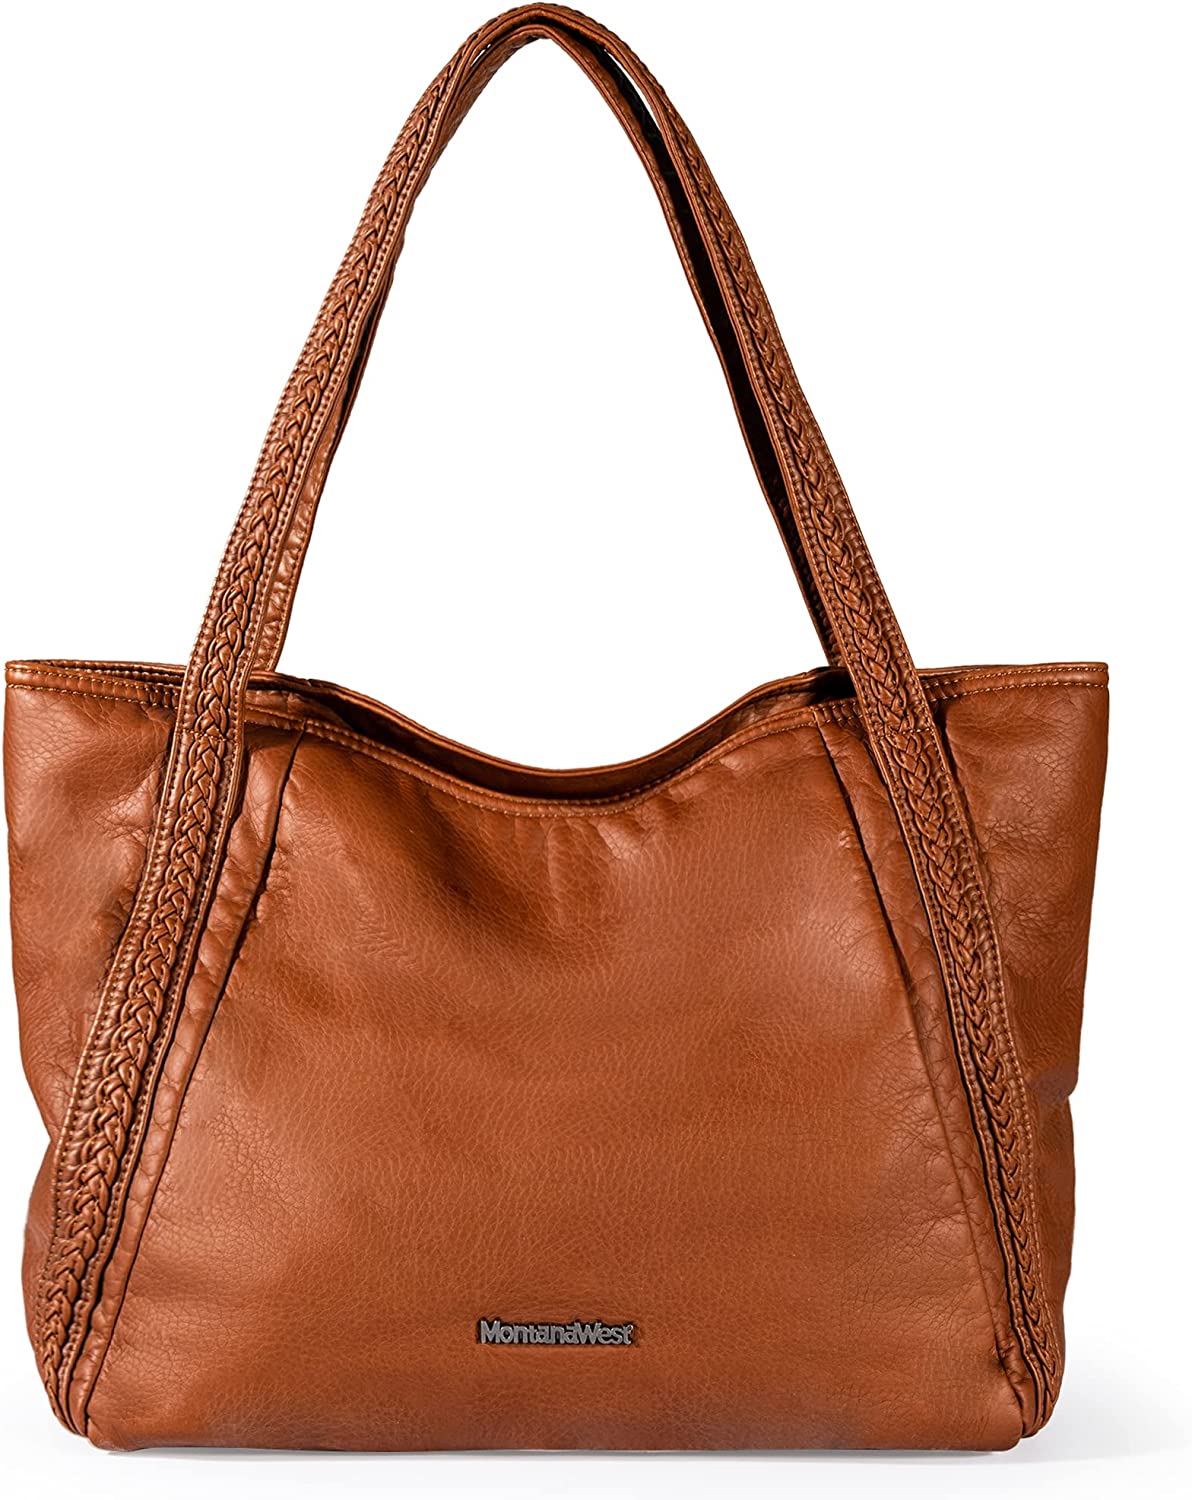 Soft Leather Handbags Black Leather Hobo Bag for Women Large